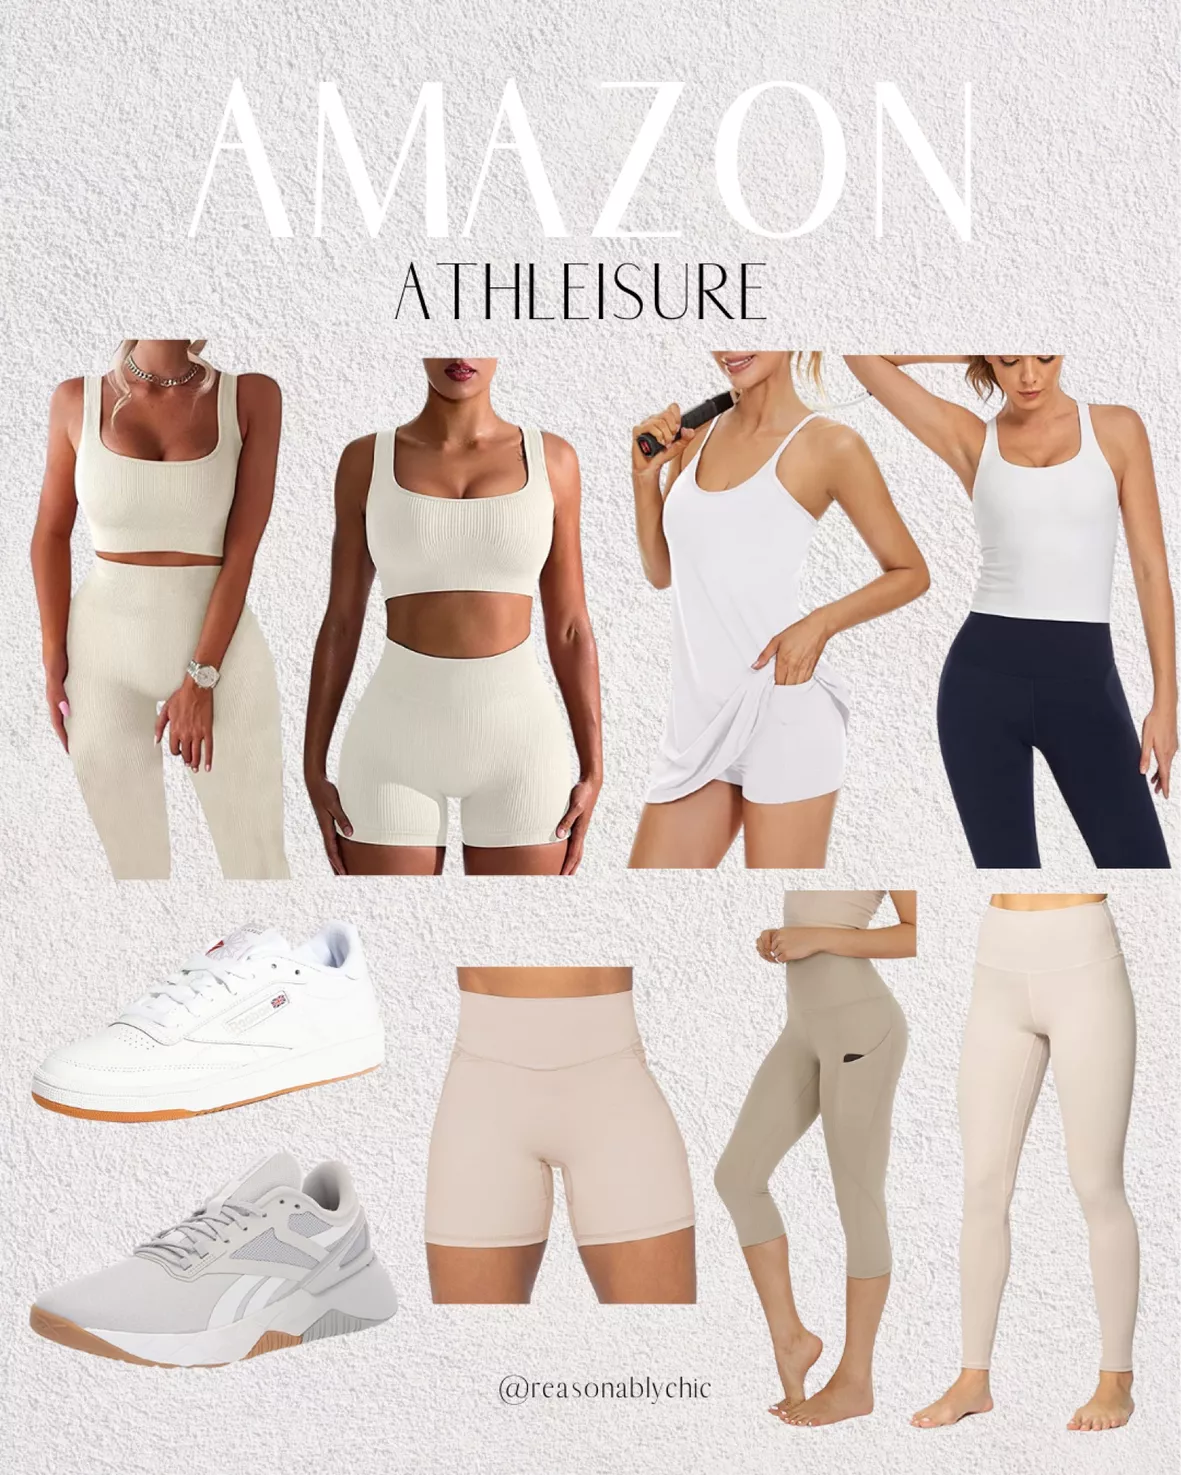 Shop Women's Active, Athleisure, Trendy Activewear